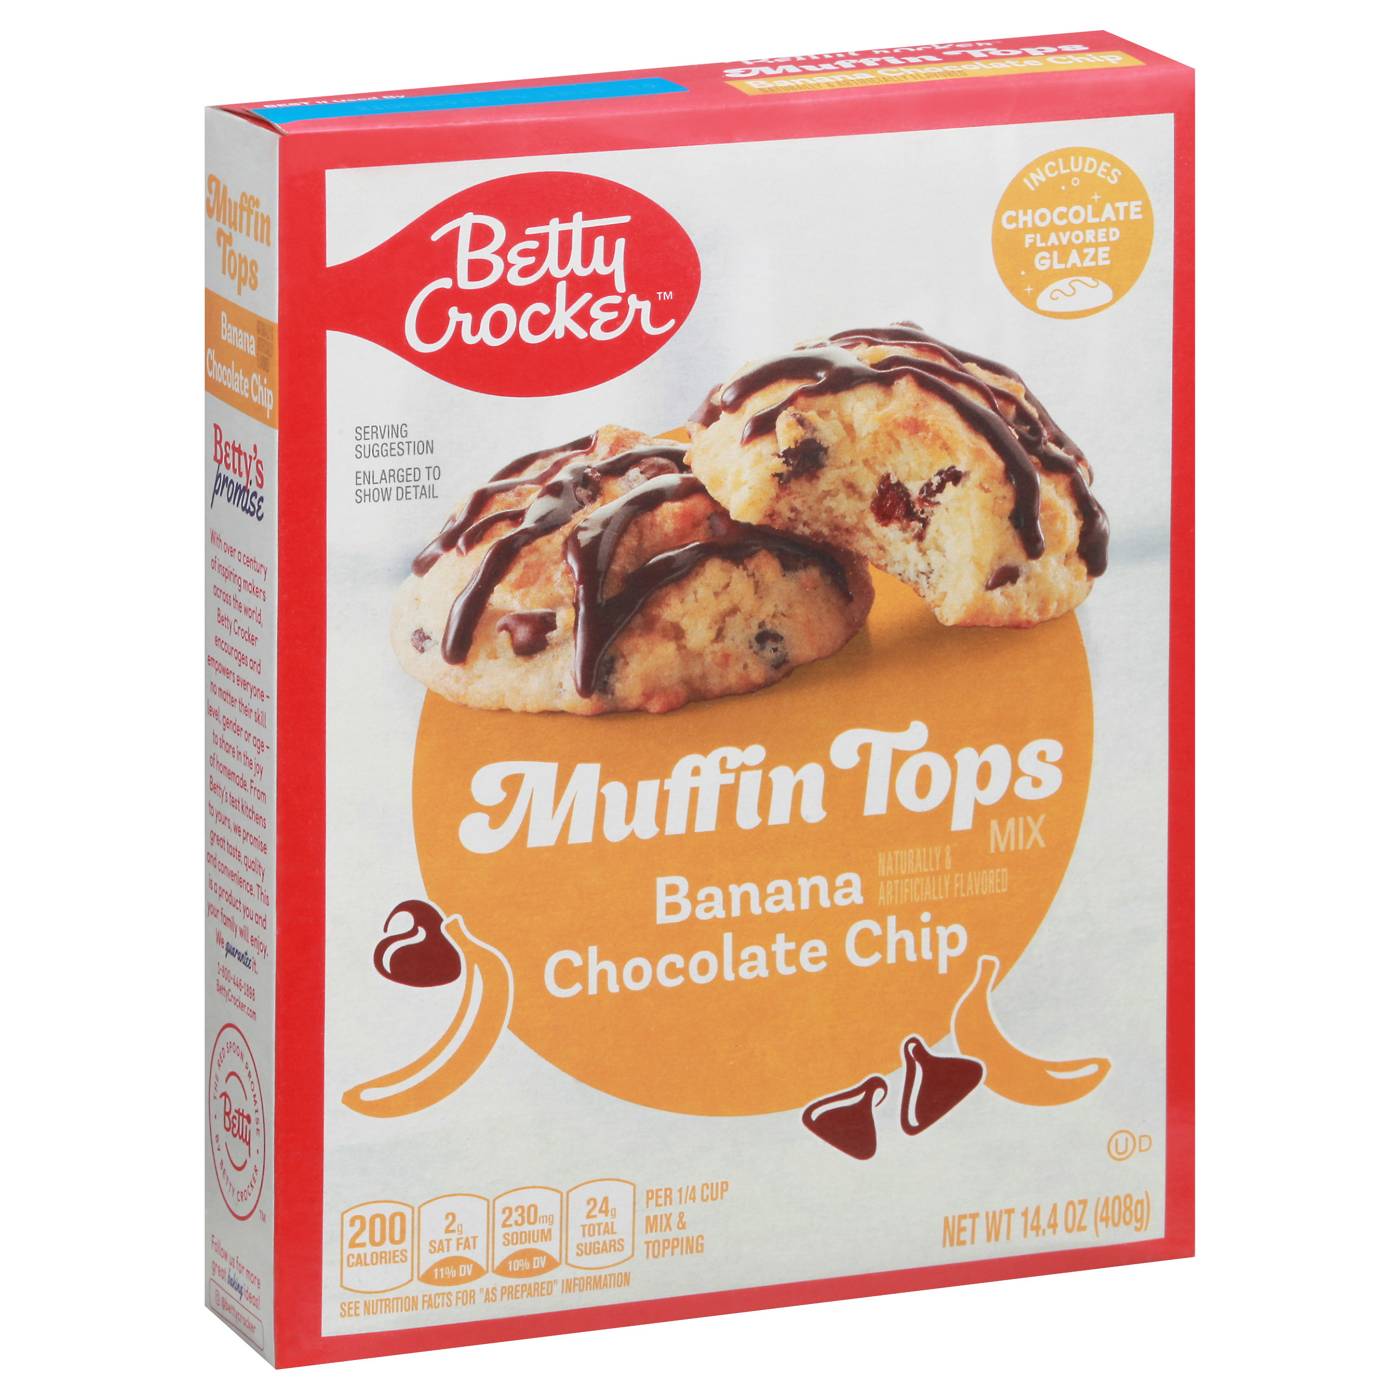 Betty Crocker Banana Chocolate Chip Muffin Tops; image 2 of 2